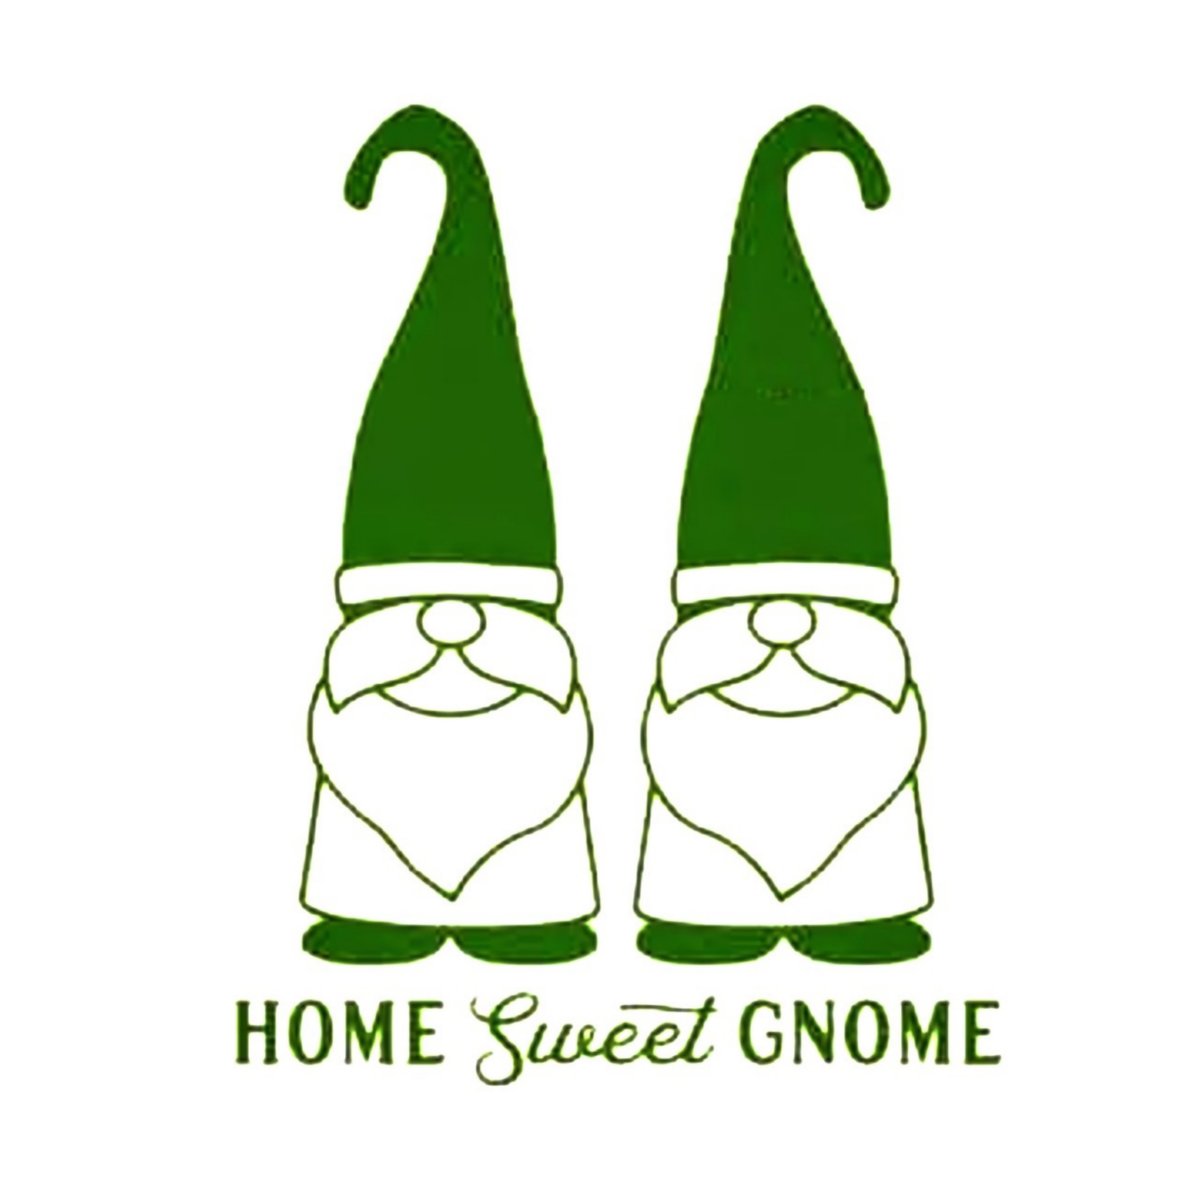 Home Sweet Gnome - monocolore - оригинал